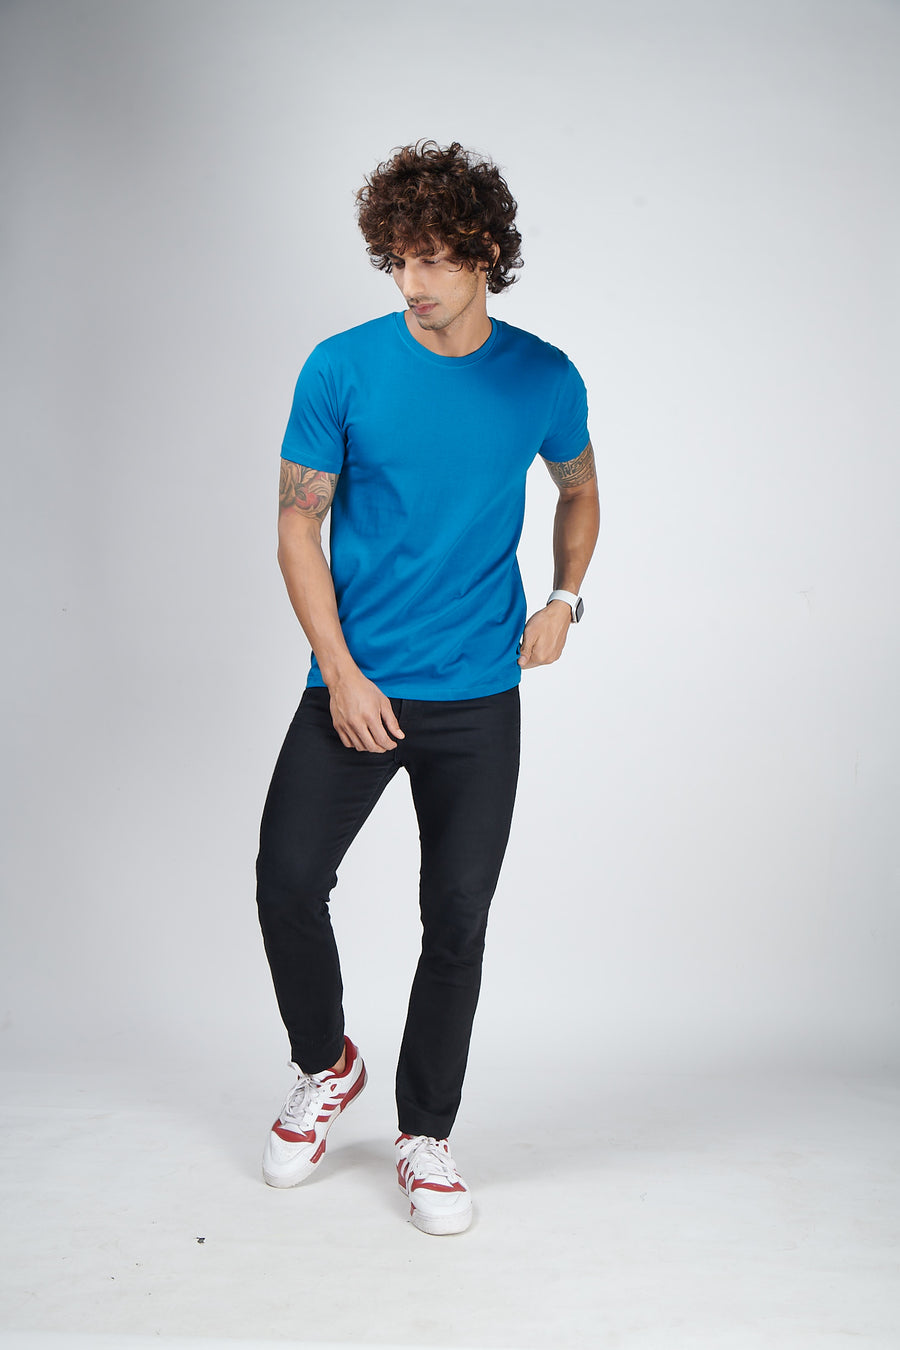 SeaPort Blue Half Sleeve T-Shirt